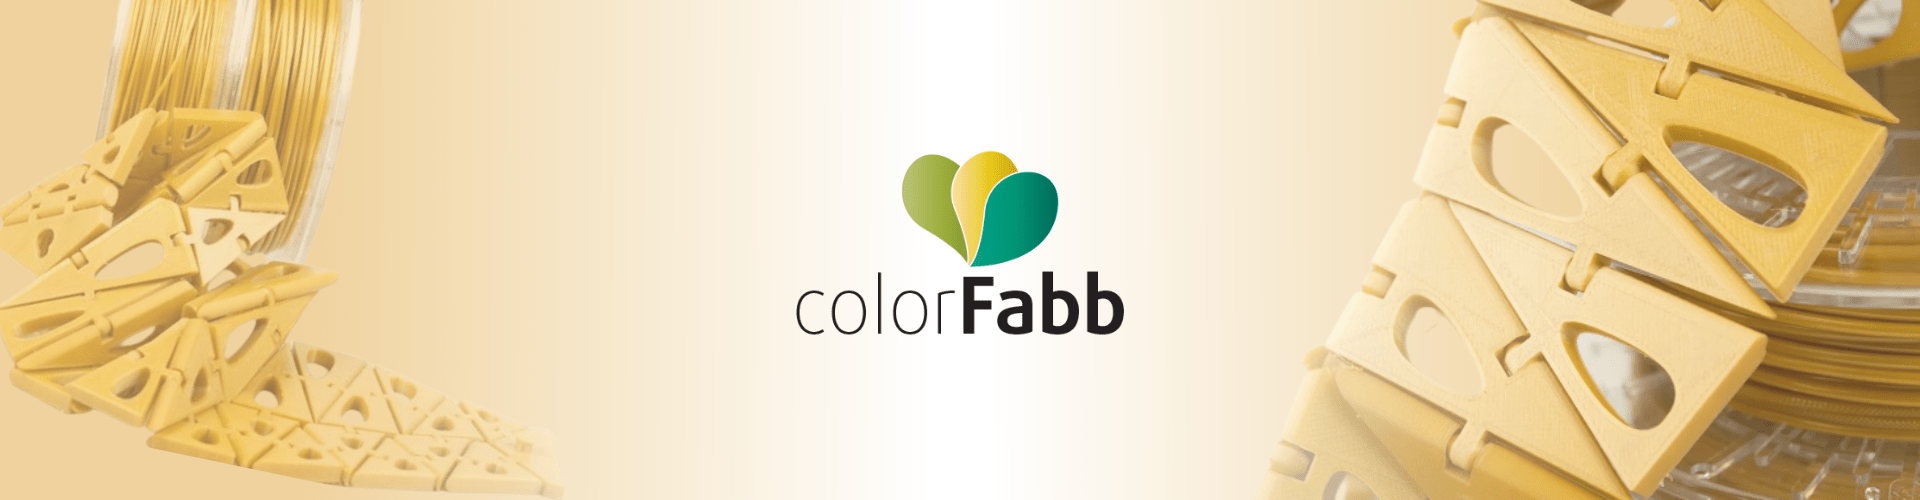 ColorFabb Banner